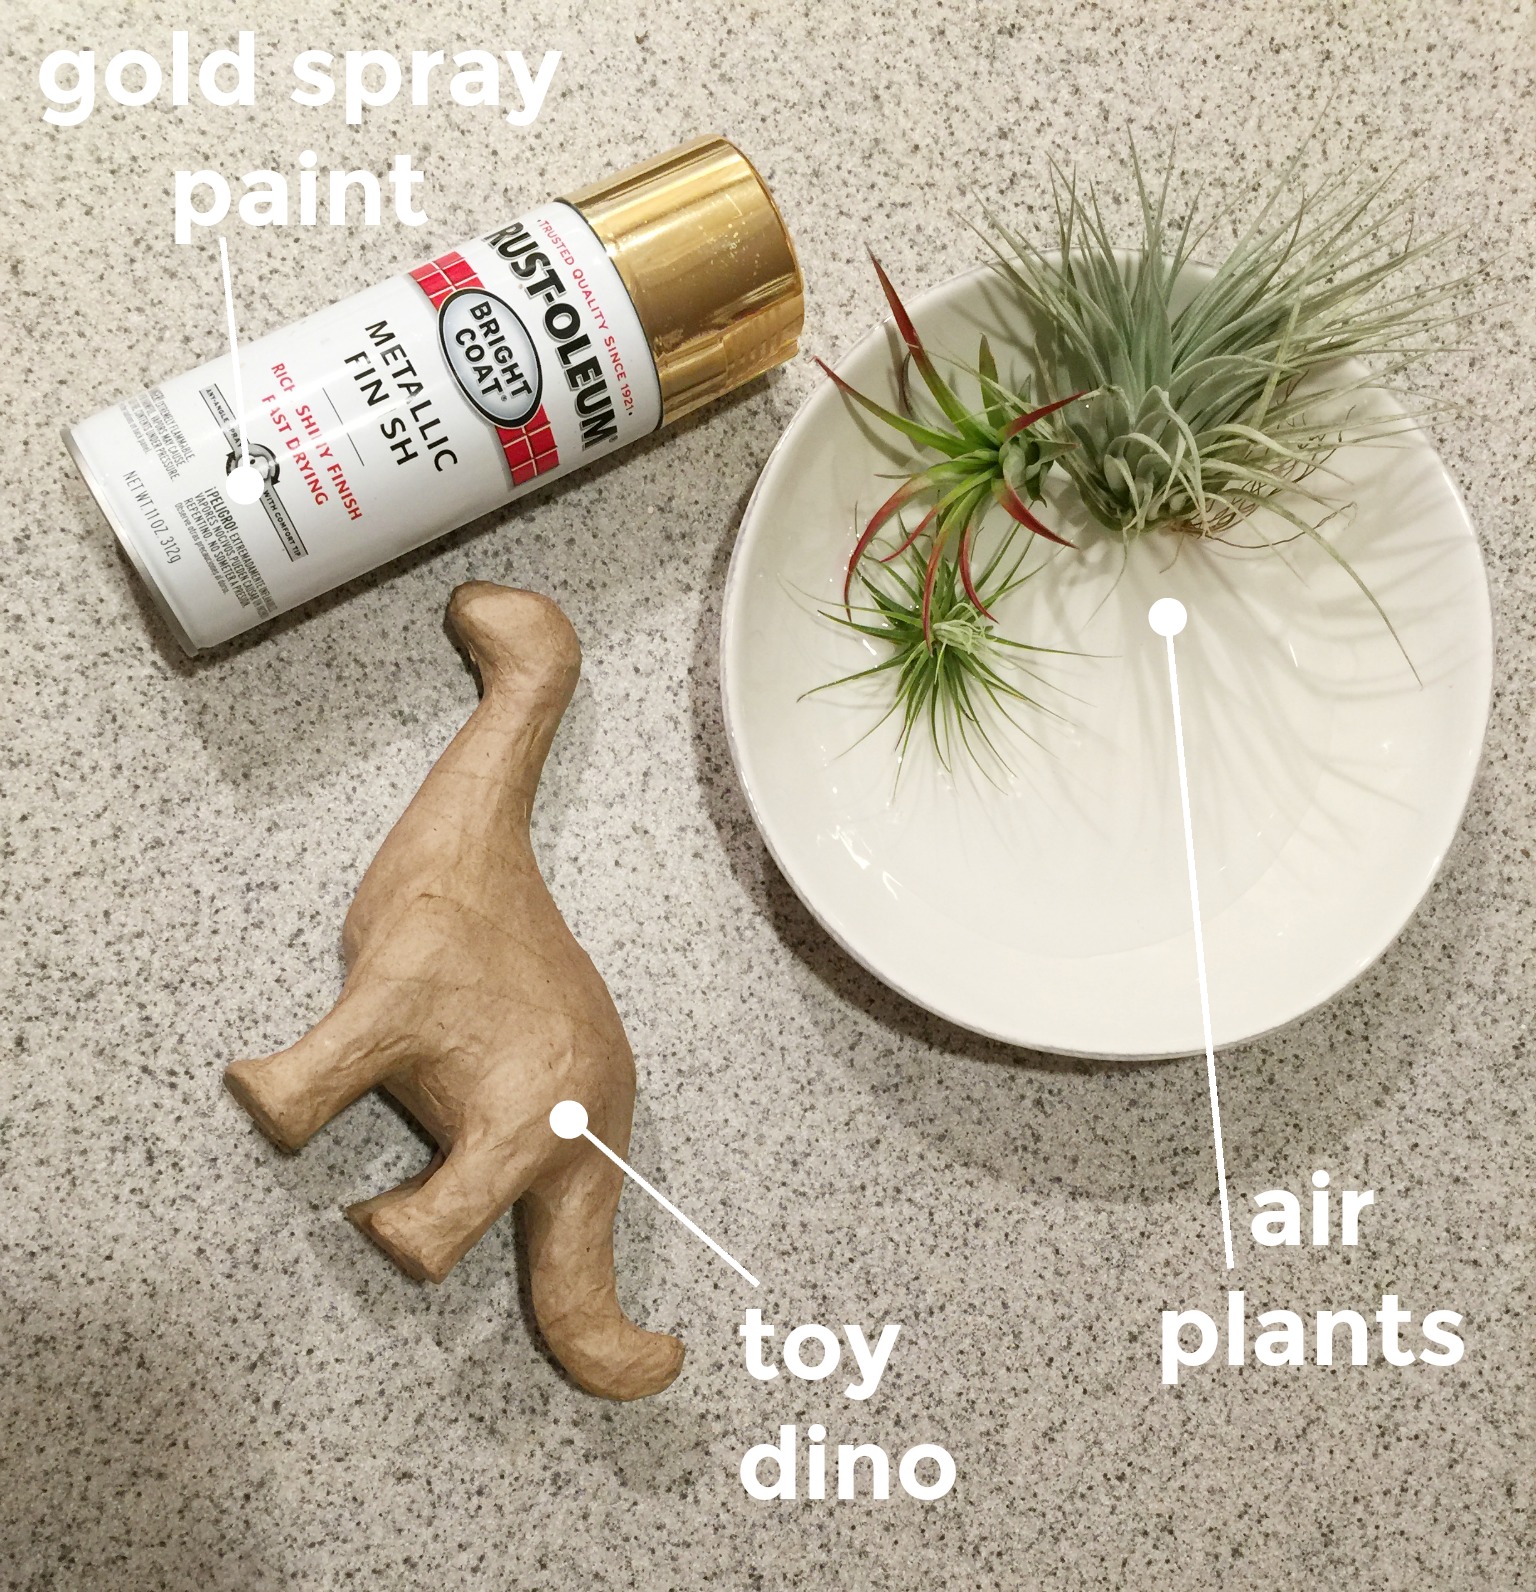 DIY Dinosaur Planter | How to Make an Animal Planter